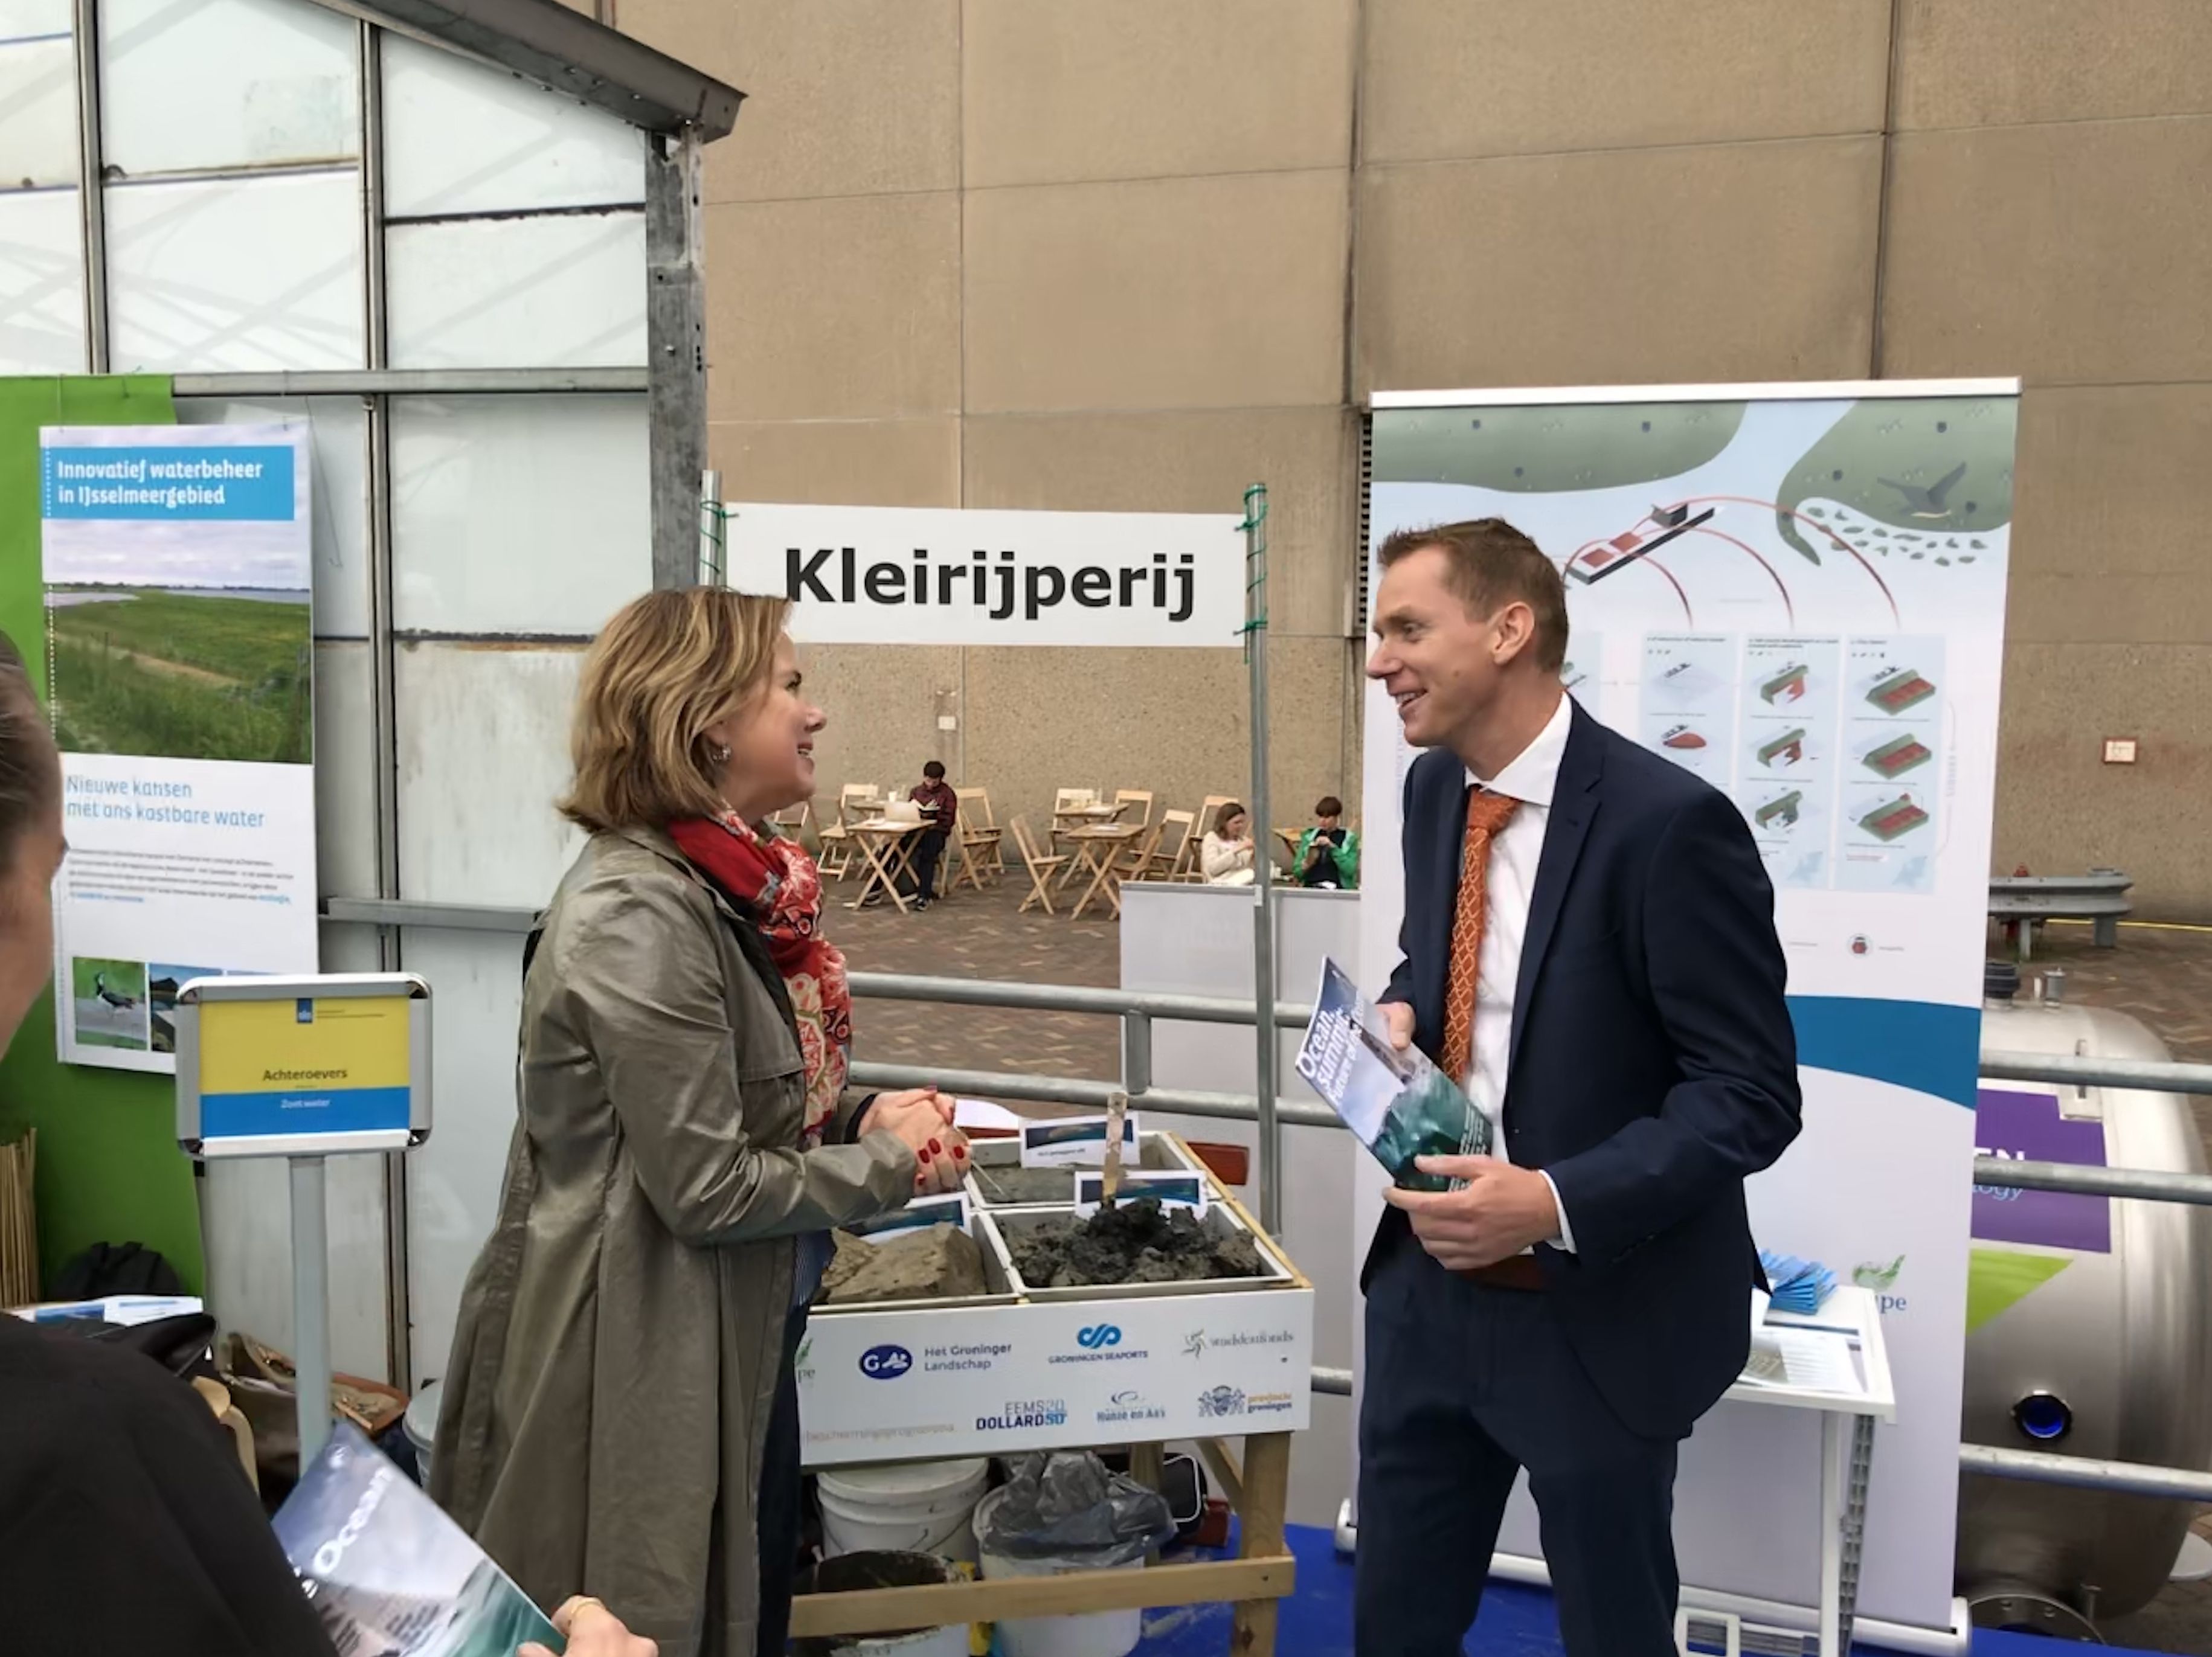 Minister Cora van Nieuwenhuizen visits Kleirijperij-demo at Innovation Expo in Rotterdam